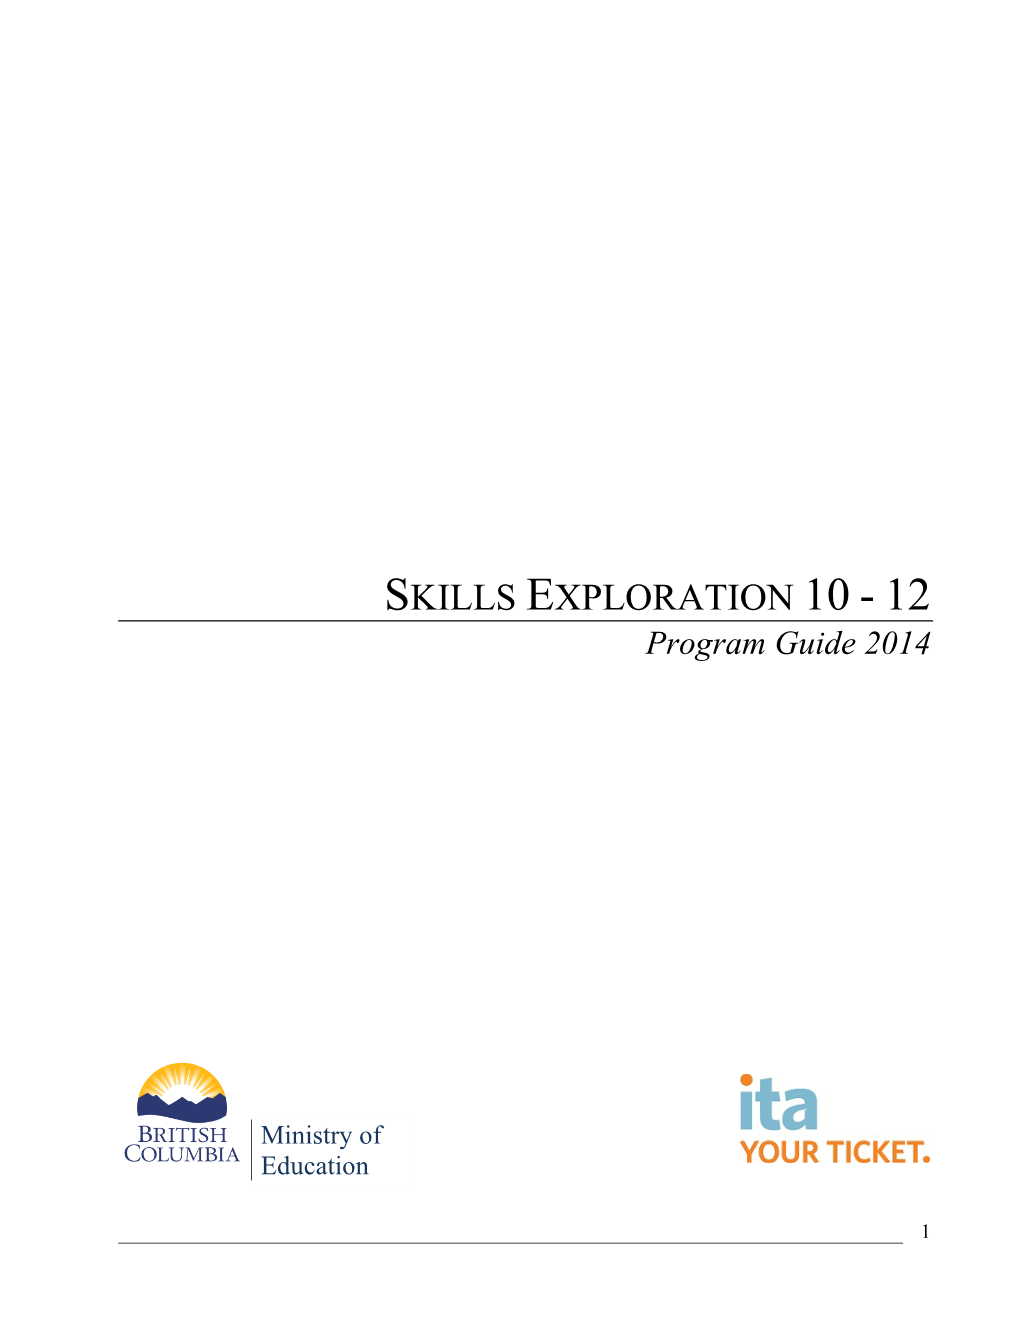 Skills Exploration 10-12 Program Guide